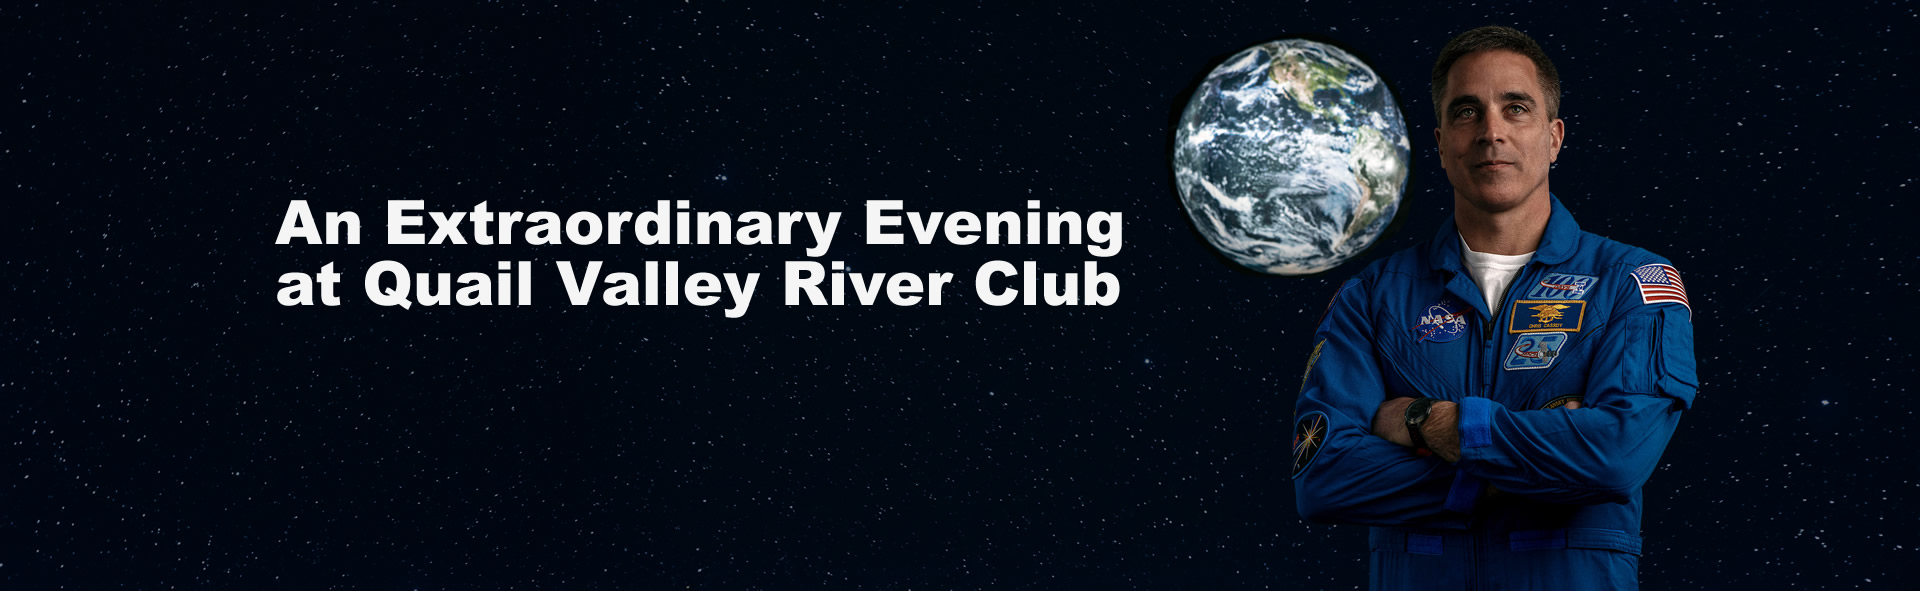 An Extraordinary Evening at Quail Valley River Club